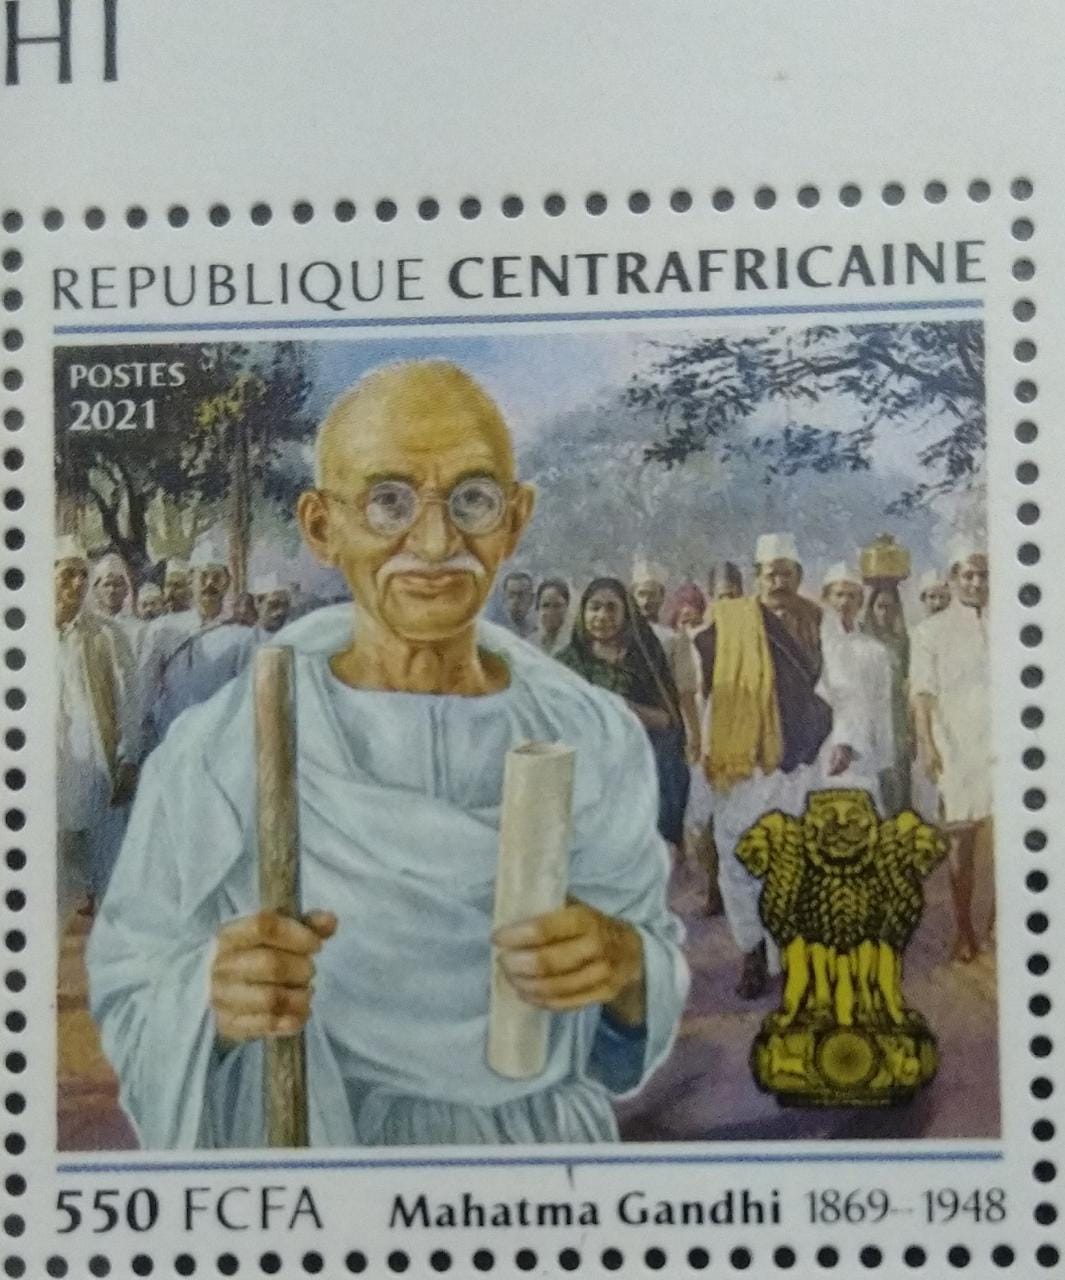 Central Africa 2021 Mahatama Gandhi single stamp